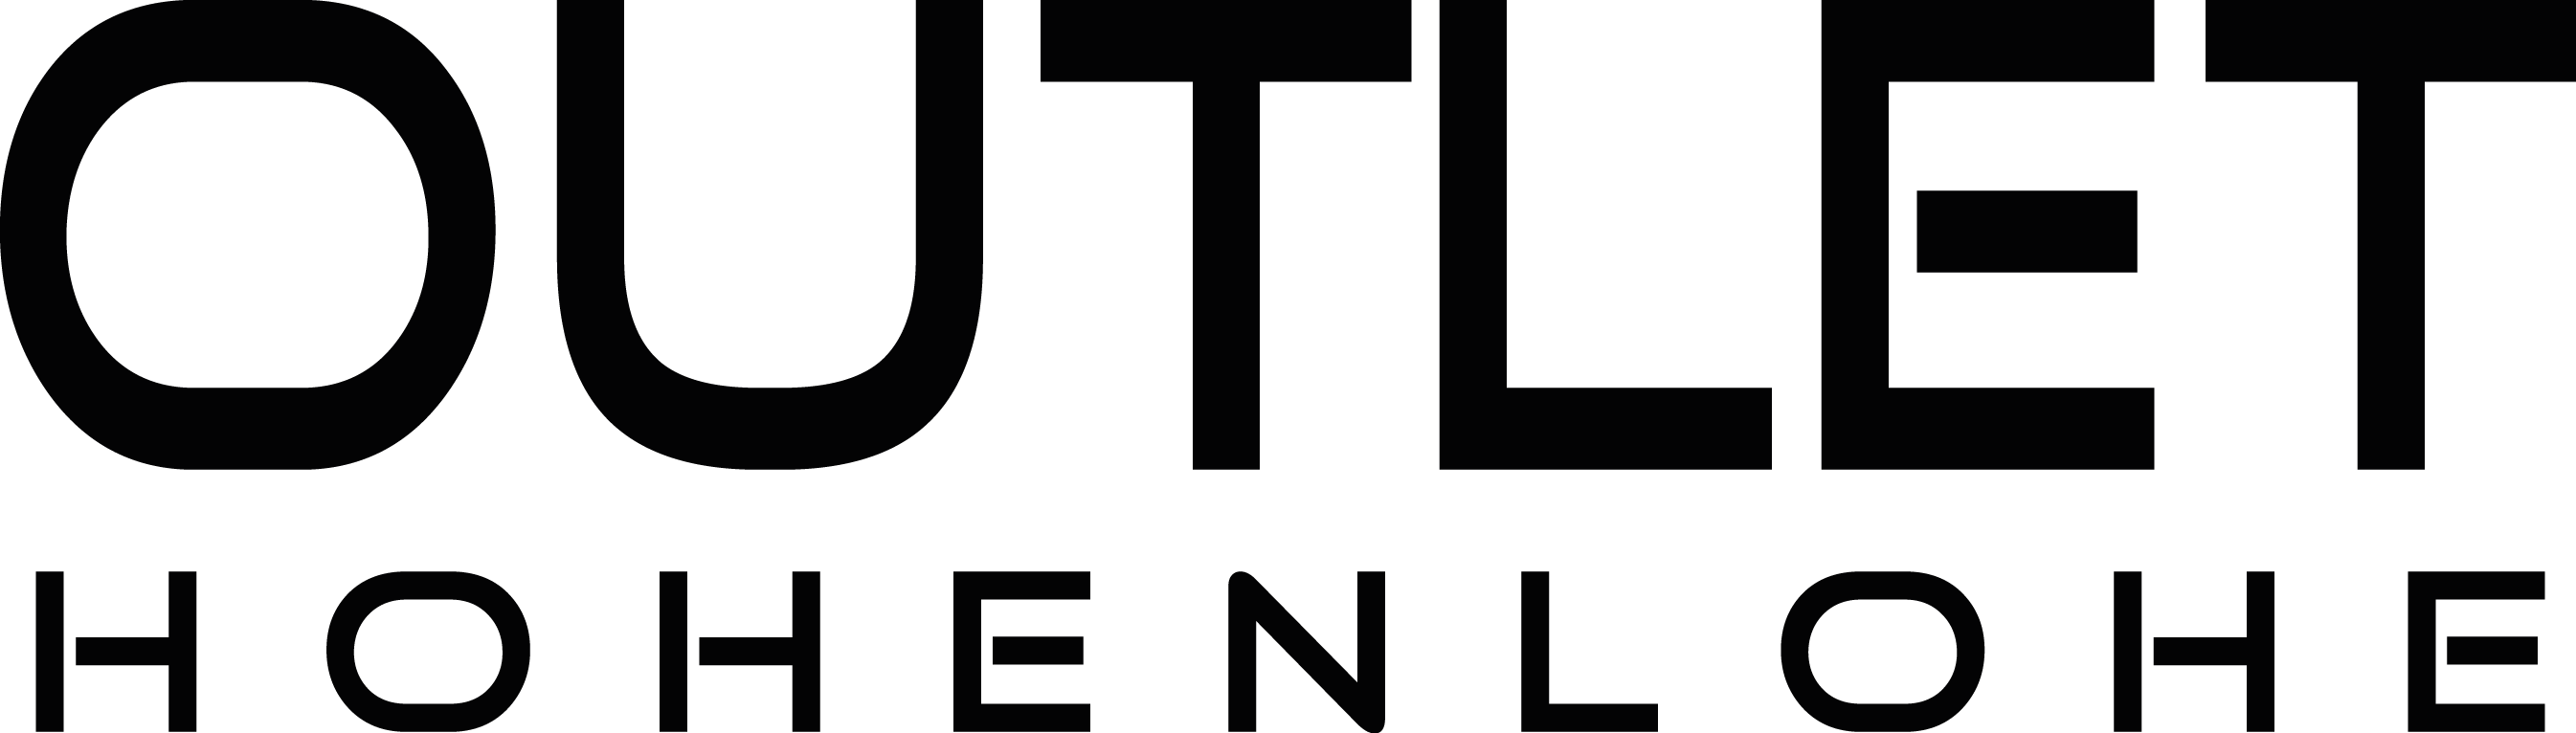 SV Brettheim Aktive Logo 2